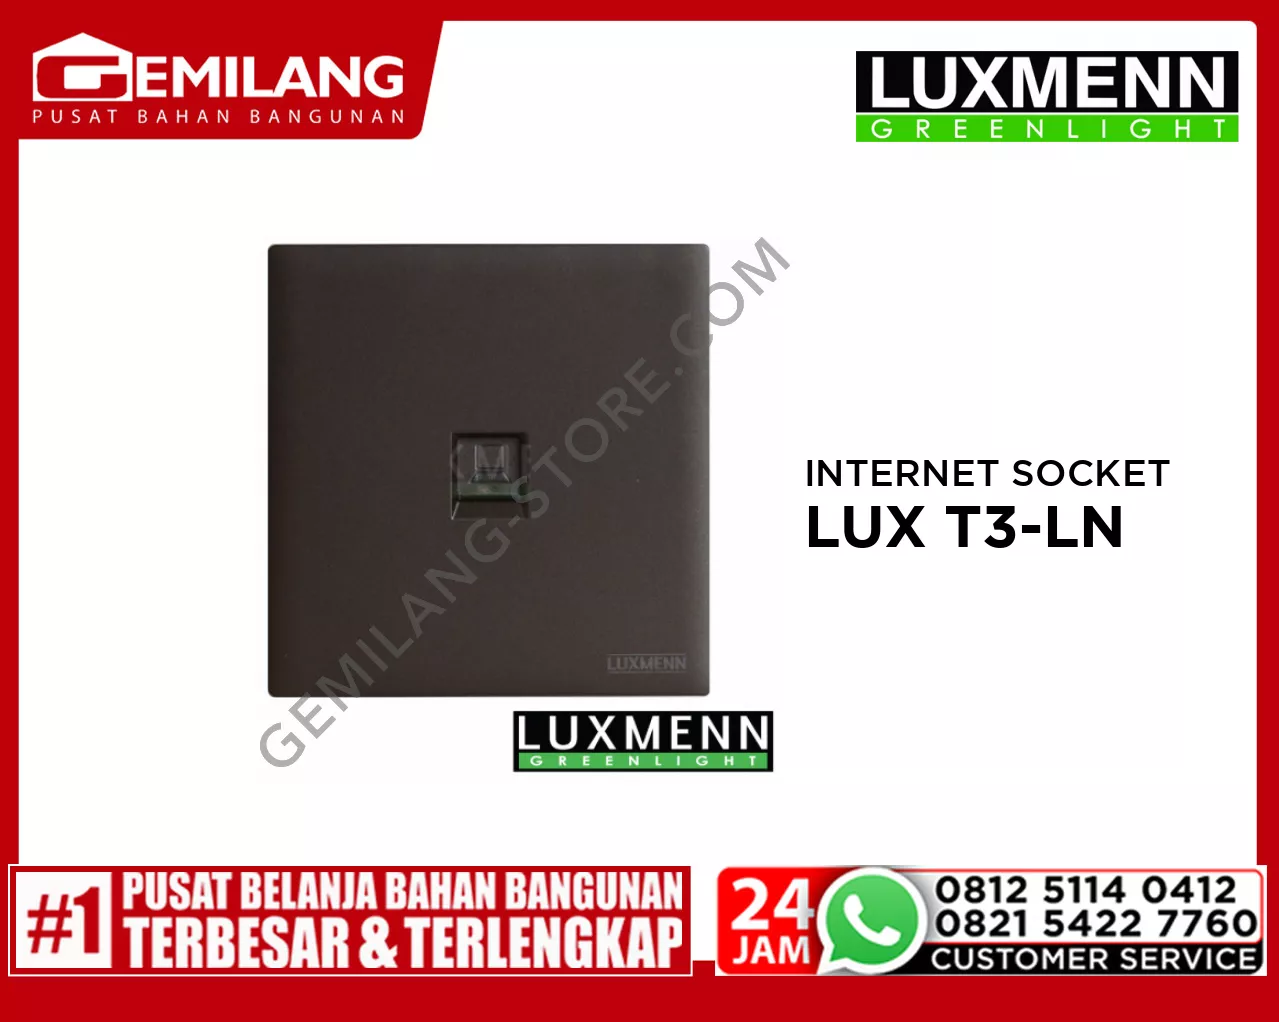 LUXMENN INTERNET SOCKET LUX T3-LN BROWN